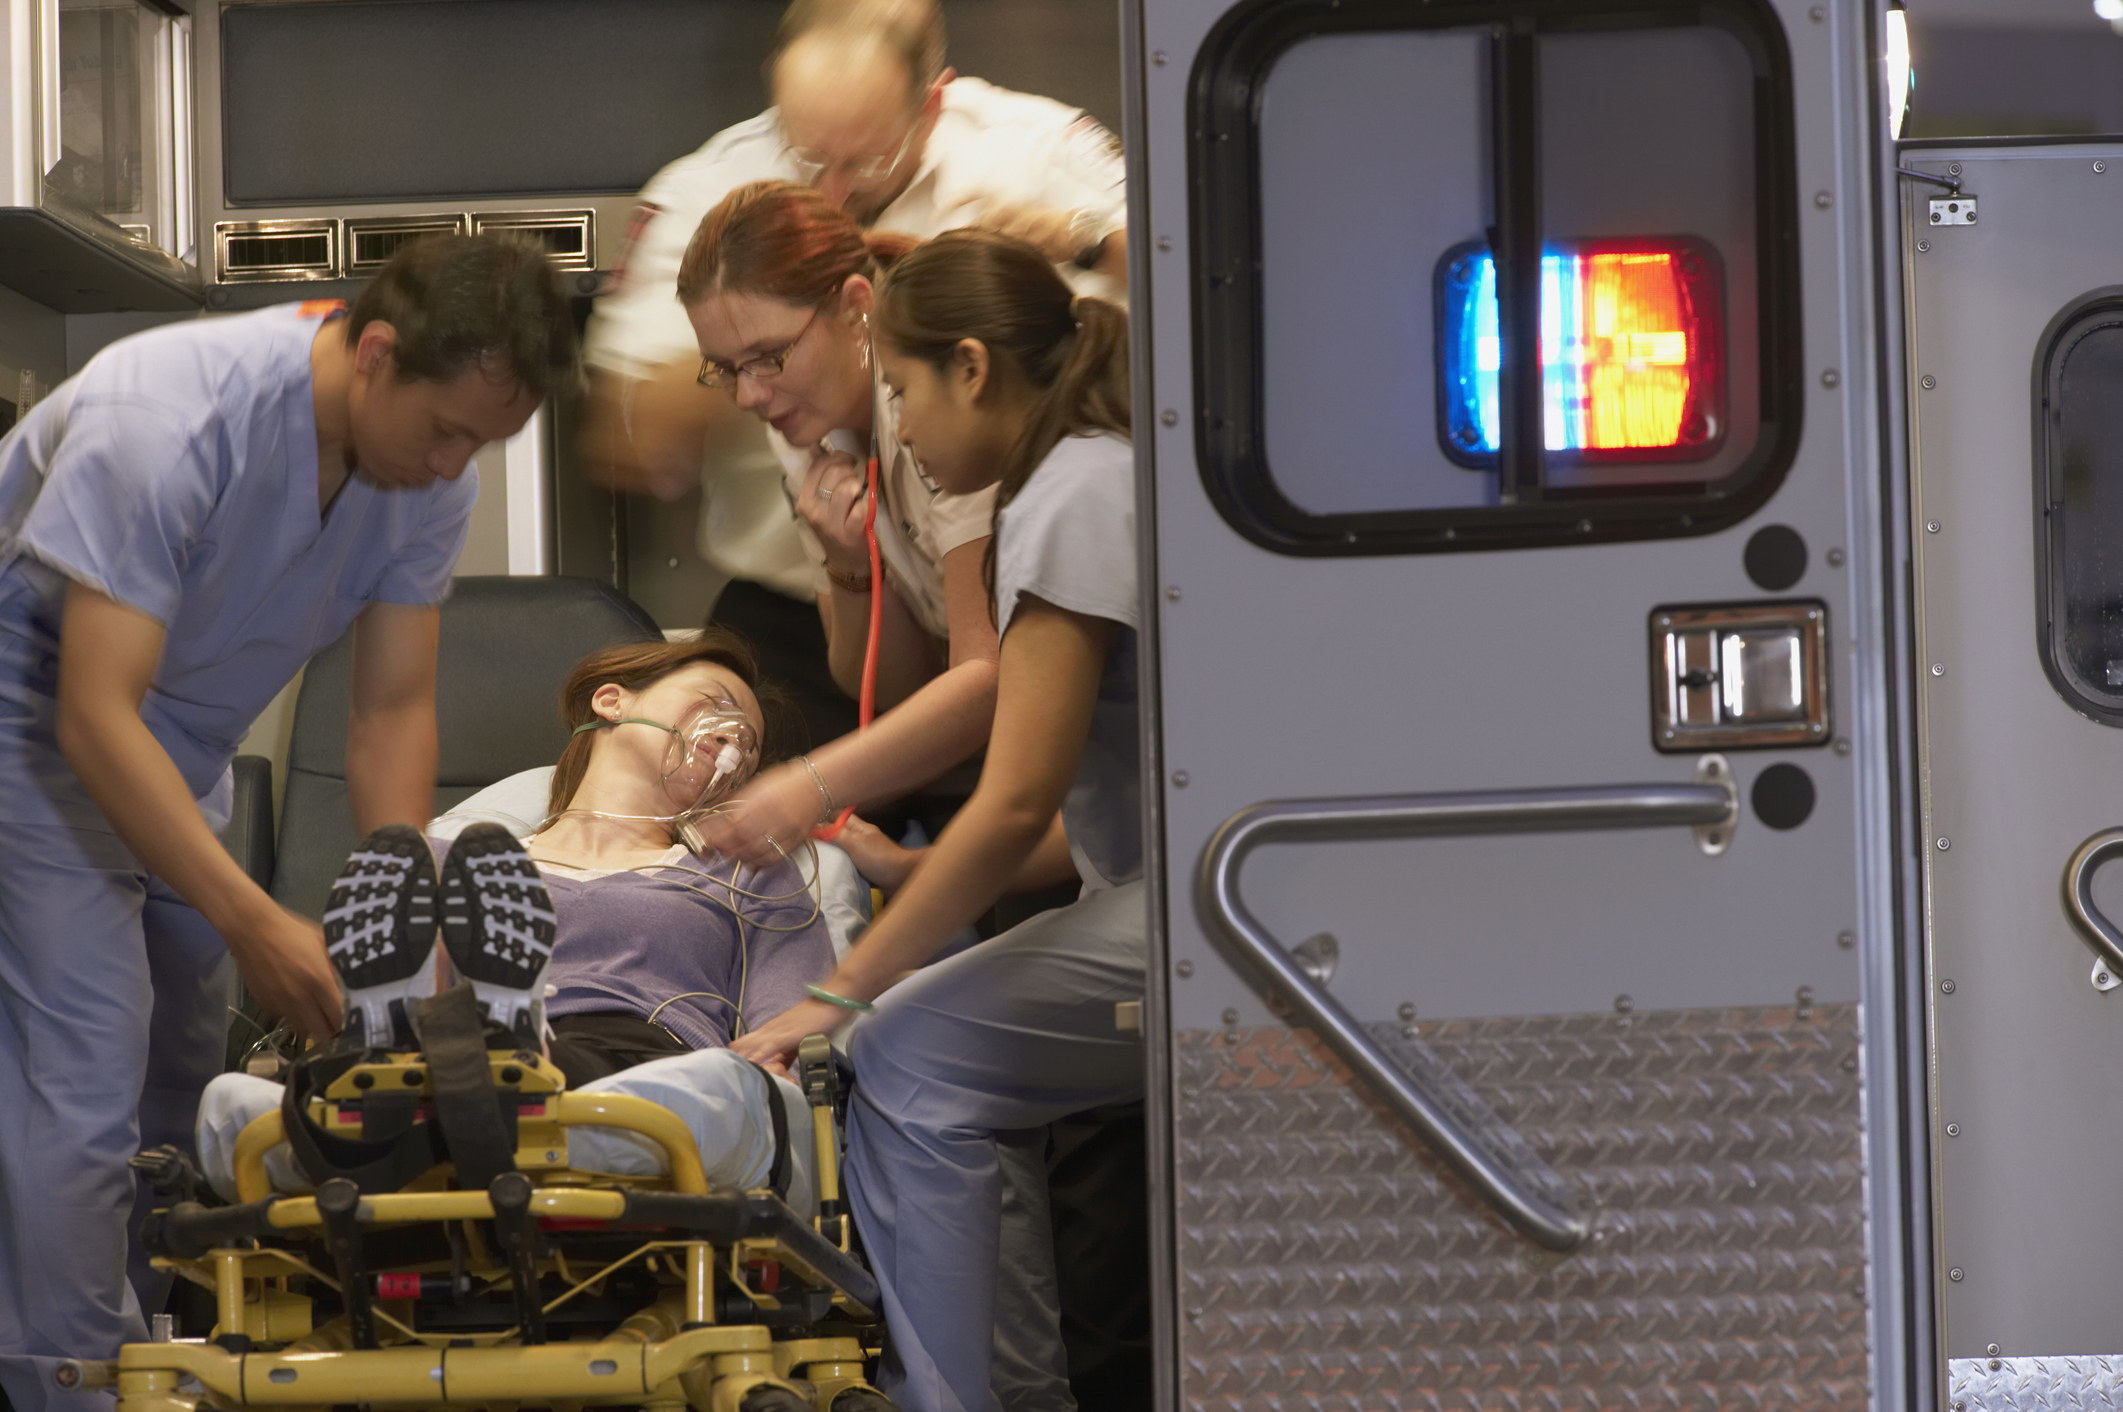 medics getting a person into an ambulance